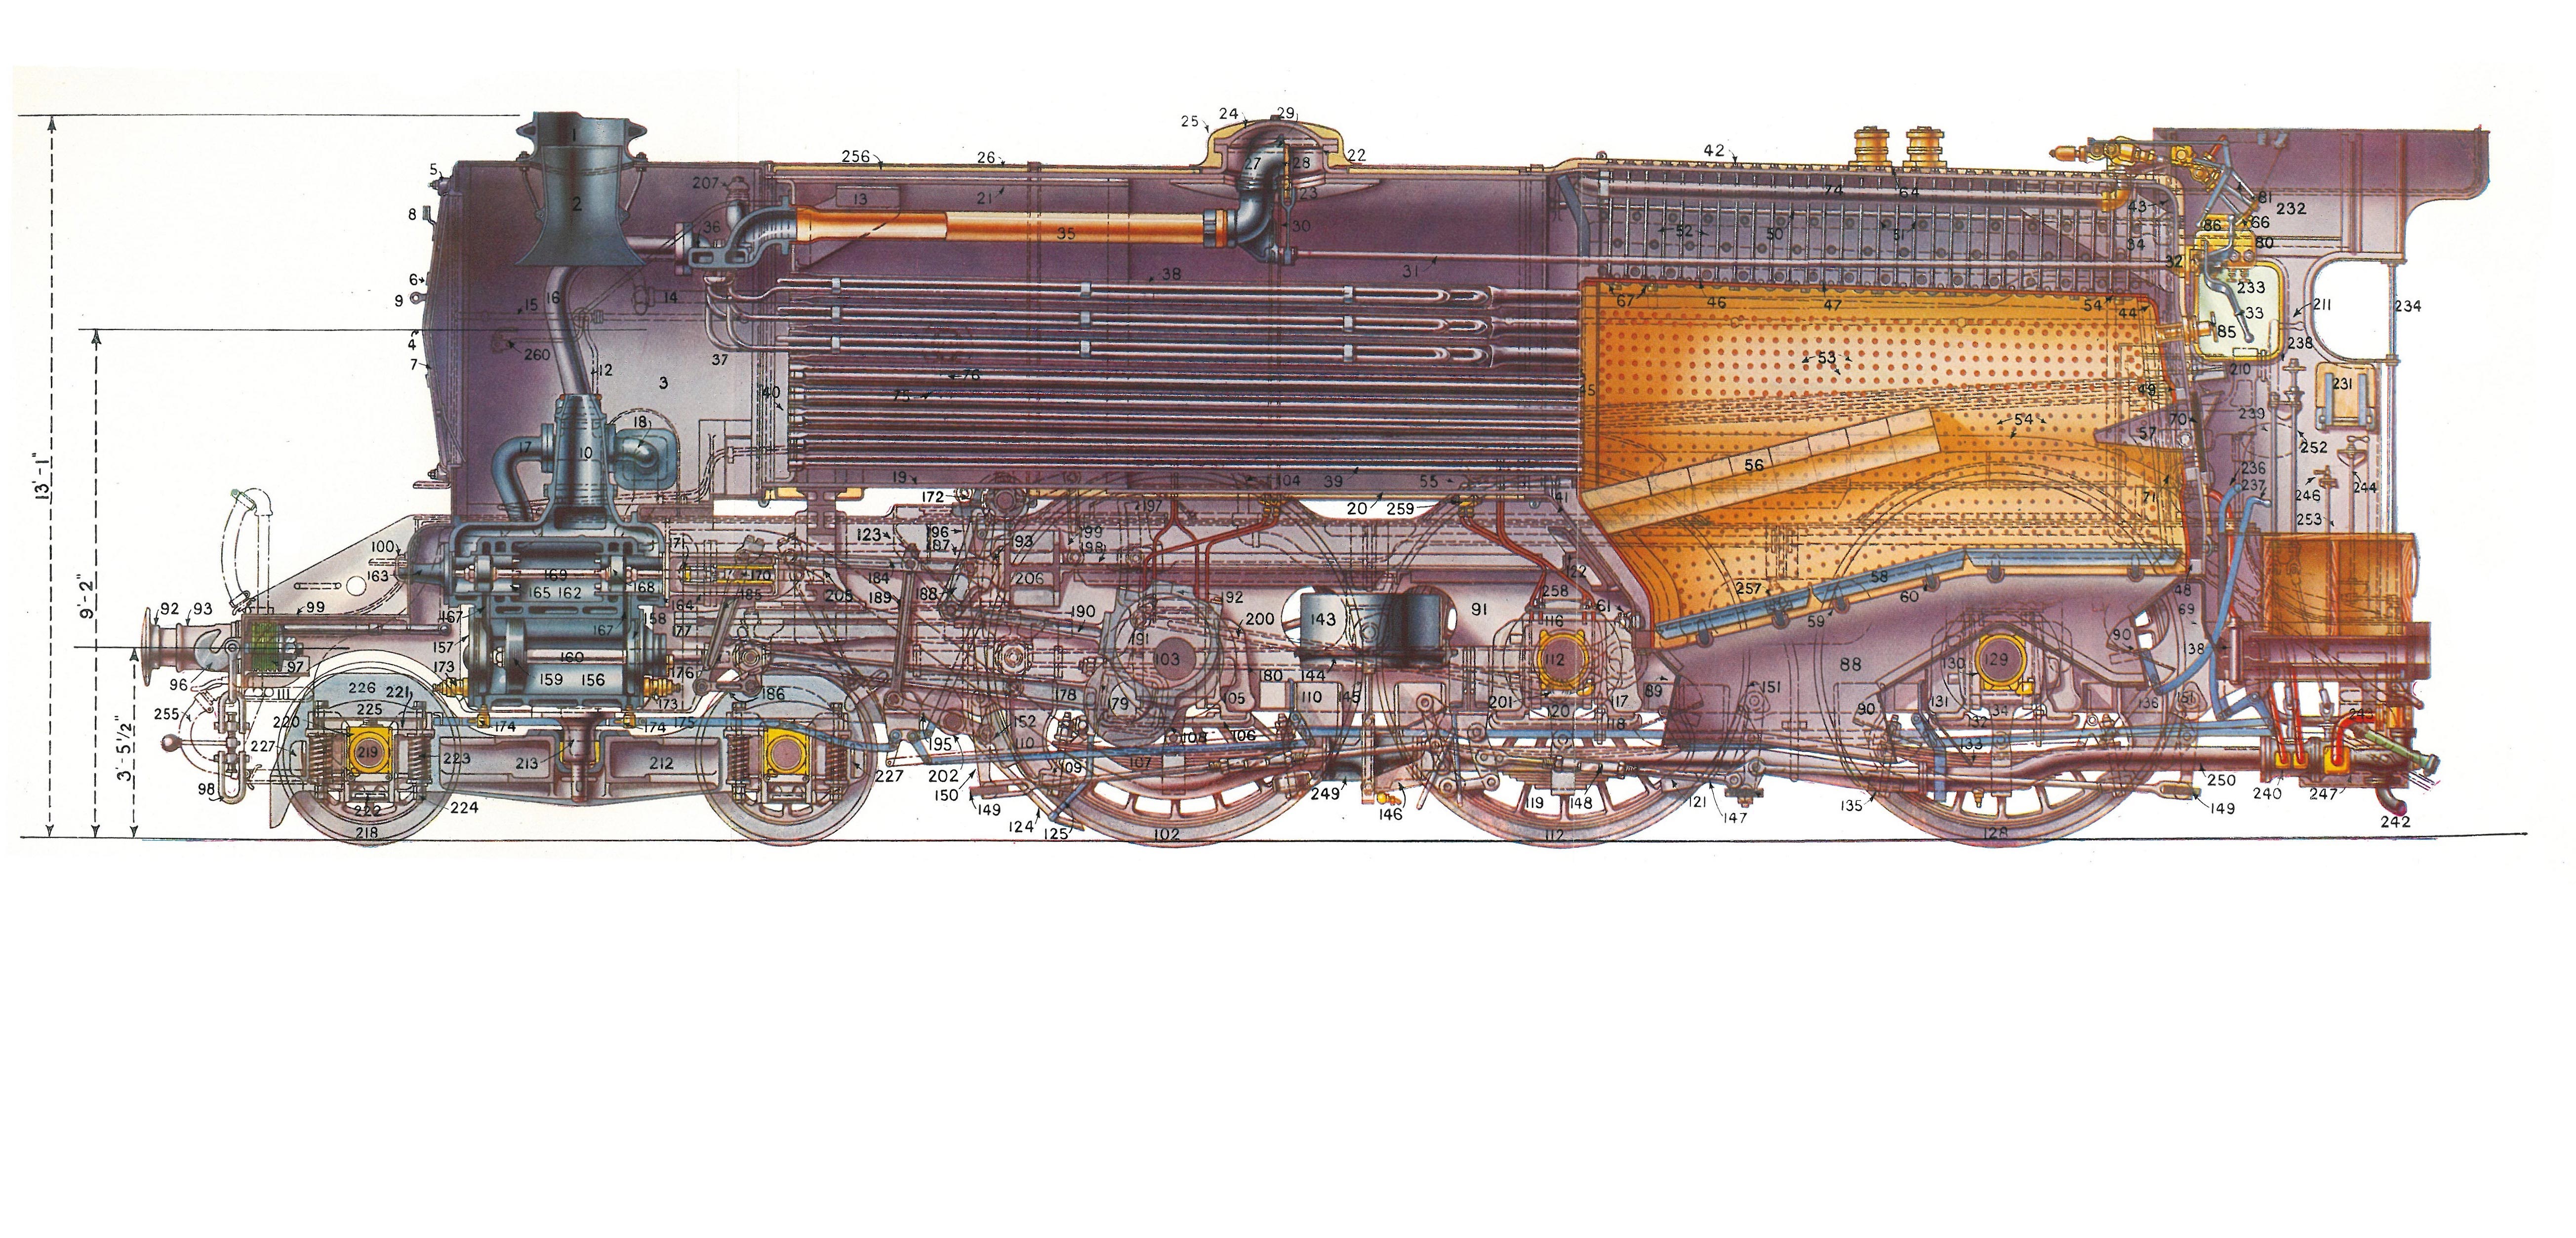 SR Lord Nelson class locomotive cutaway